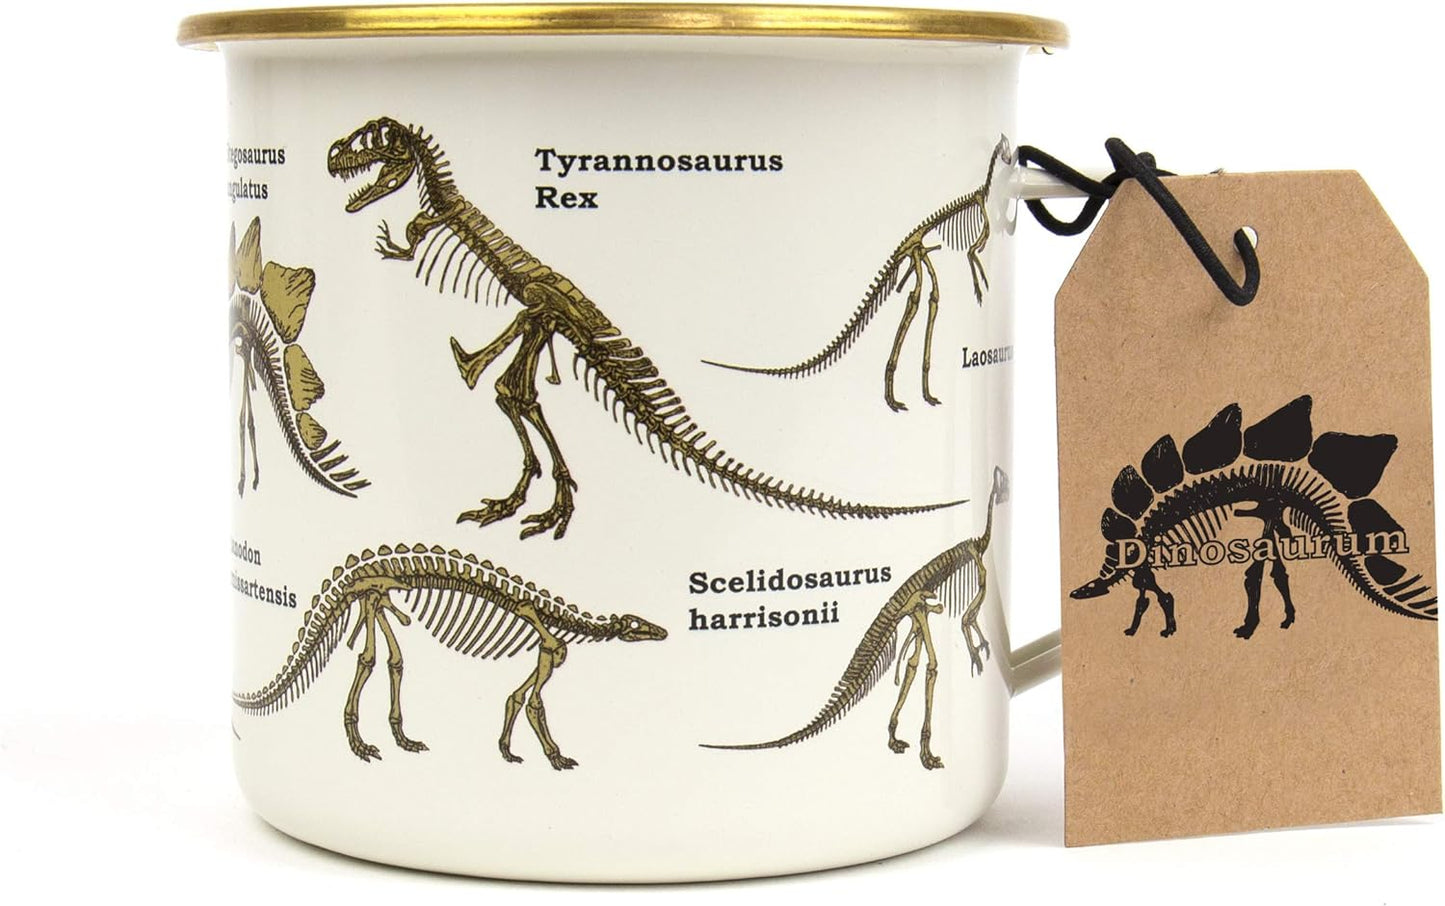 Gift Republic Dinosaur Enamel Mug #GR270113